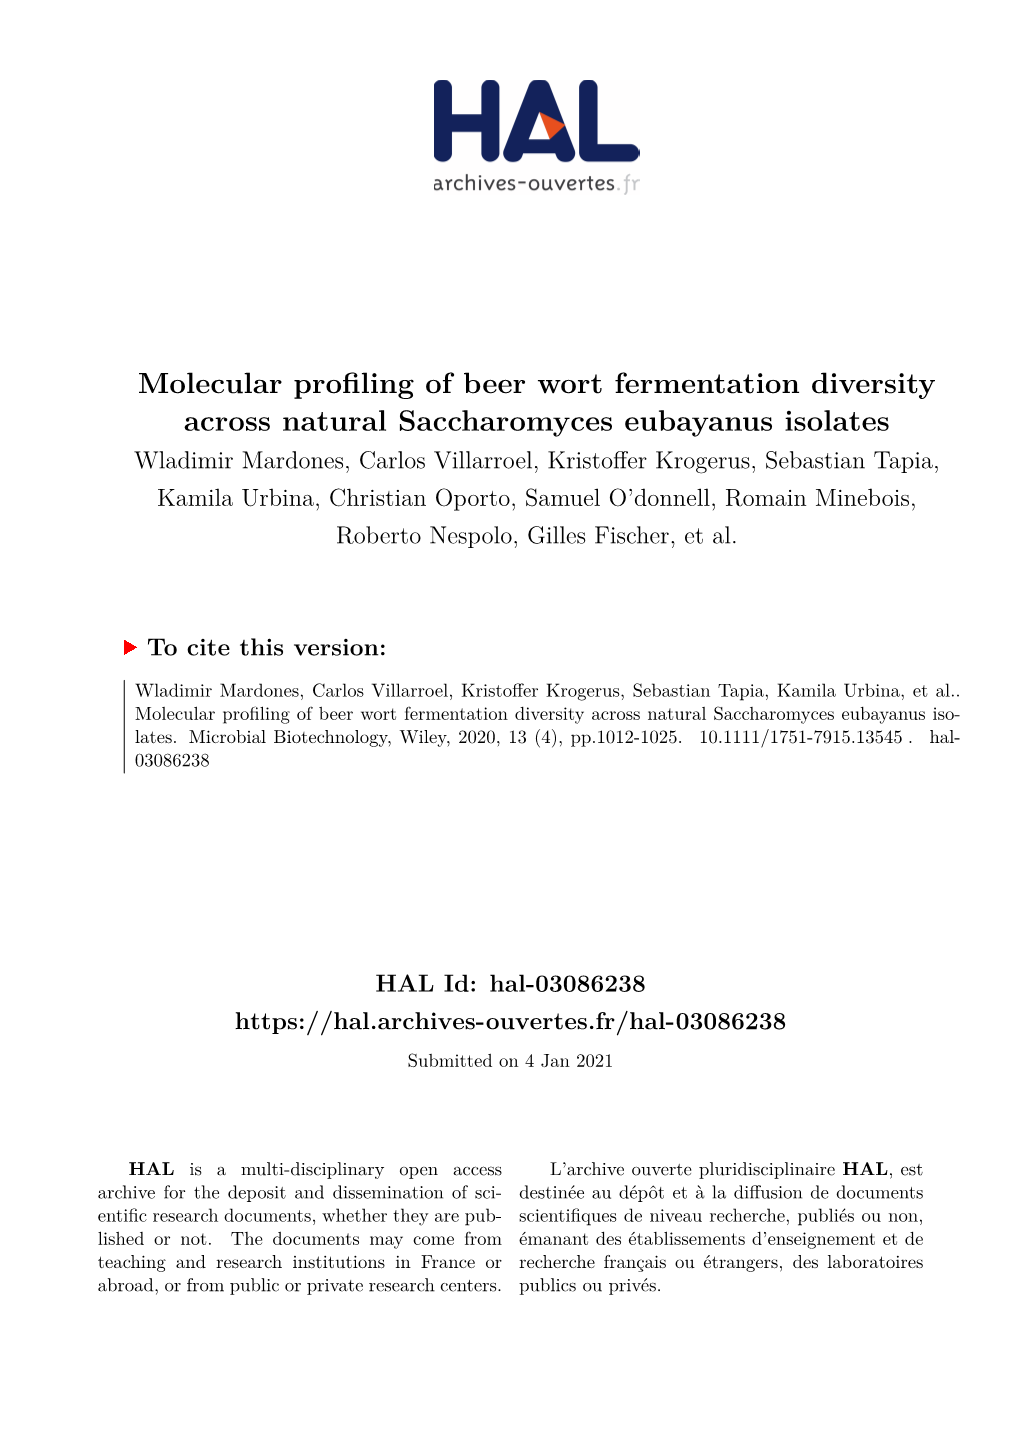 Molecular Profiling of Beer Wort Fermentation Diversity Across Natural Saccharomyces Eubayanus Isolates